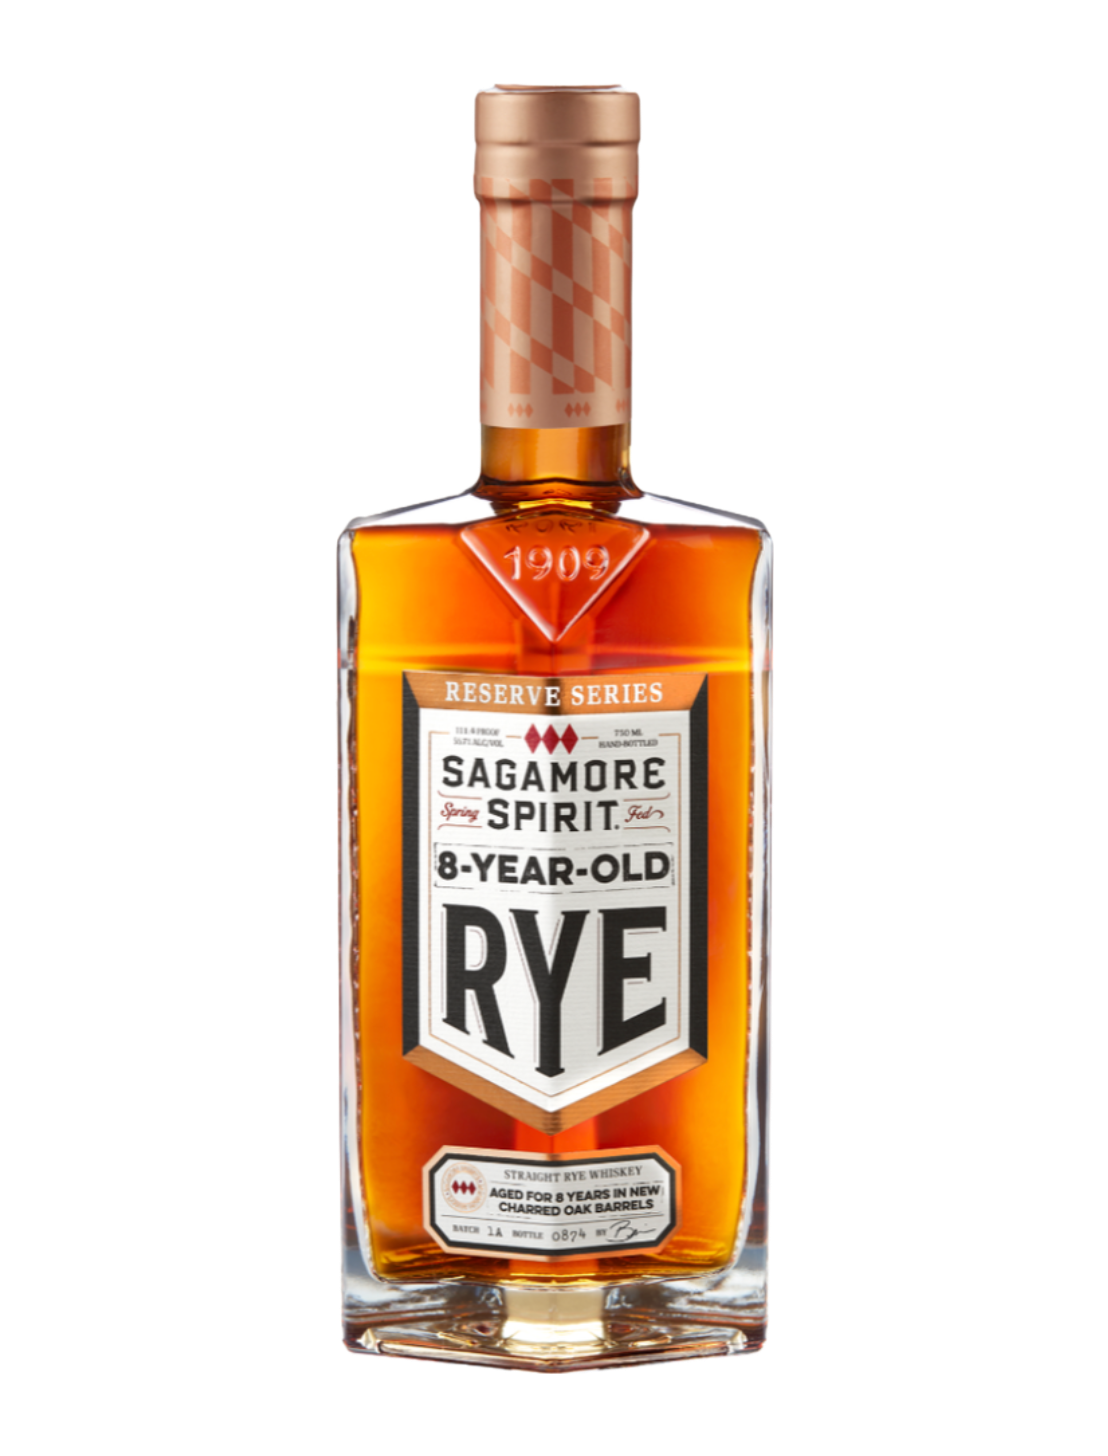 An elegant bottle of Sagamore Spirit 8 Year Rye in front of a plain white background